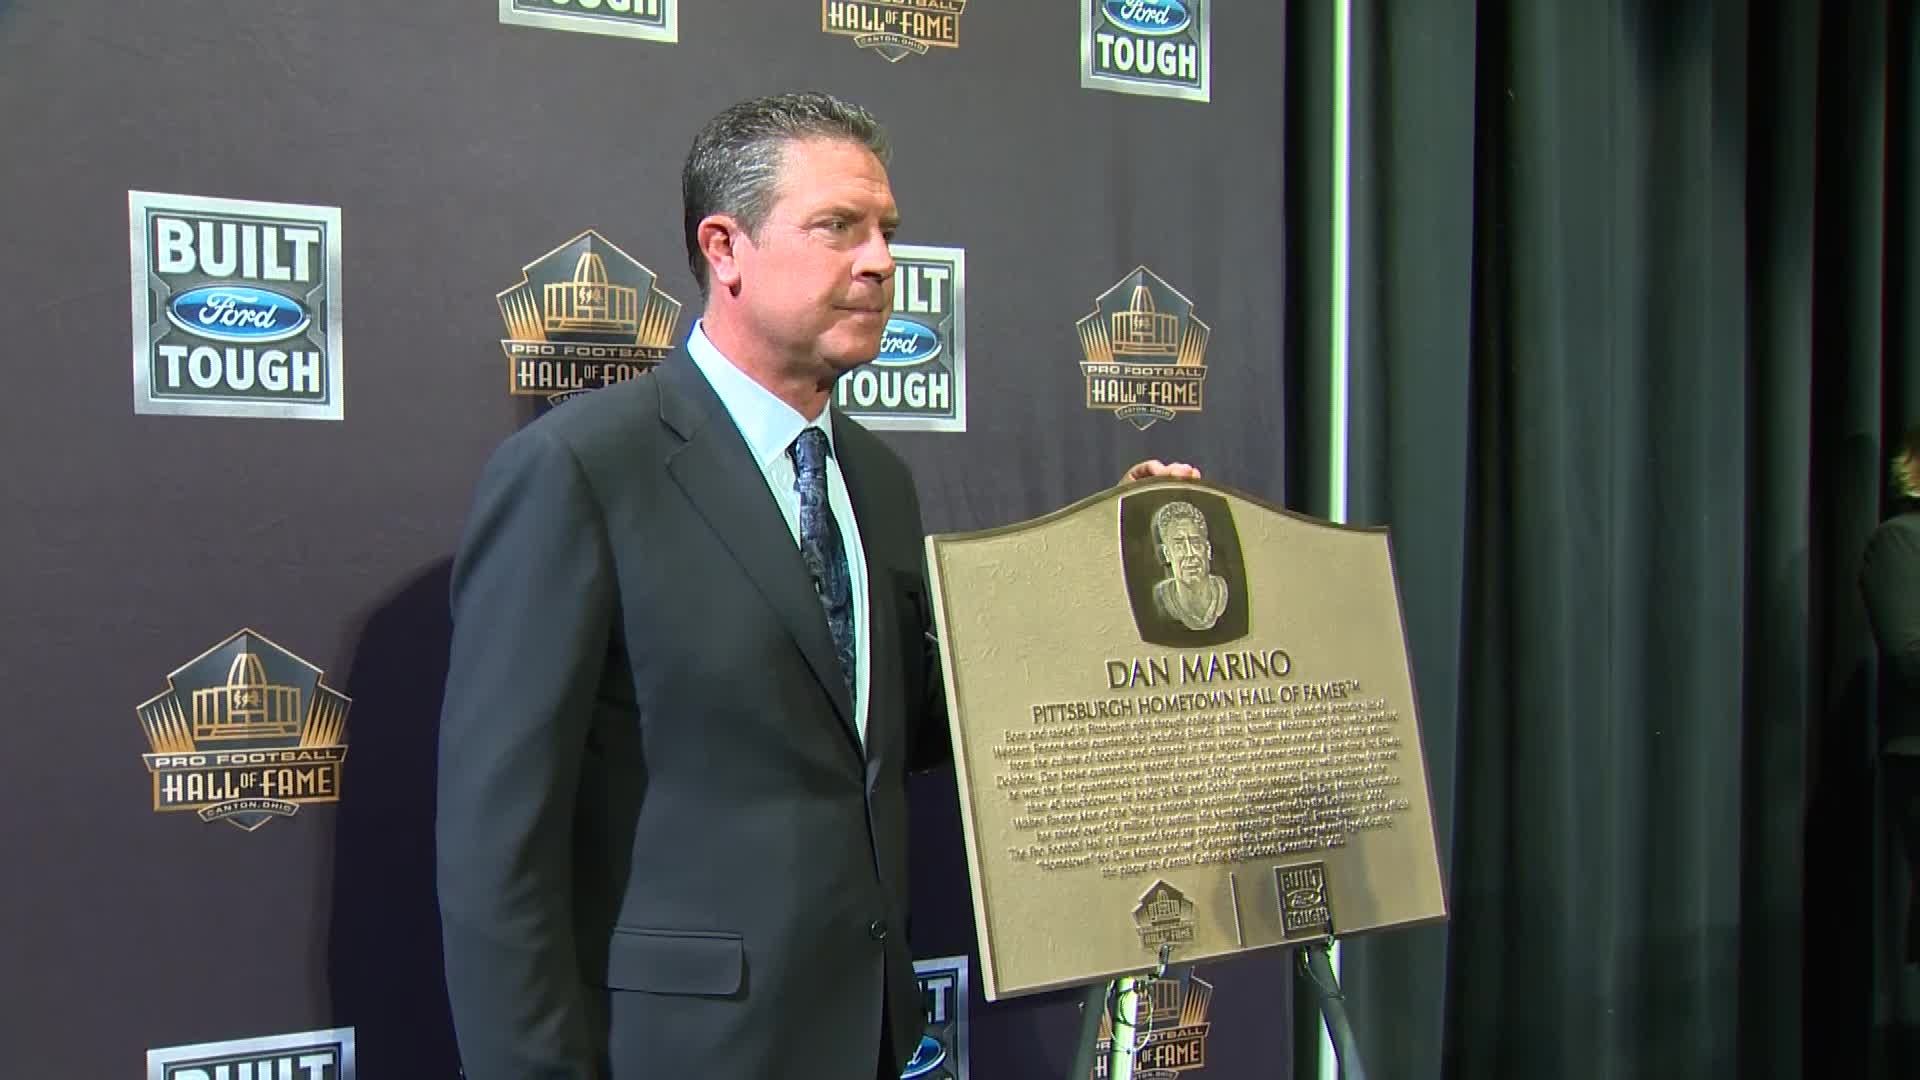 New honor brings Hall of Famer Dan Marino home to Oakland